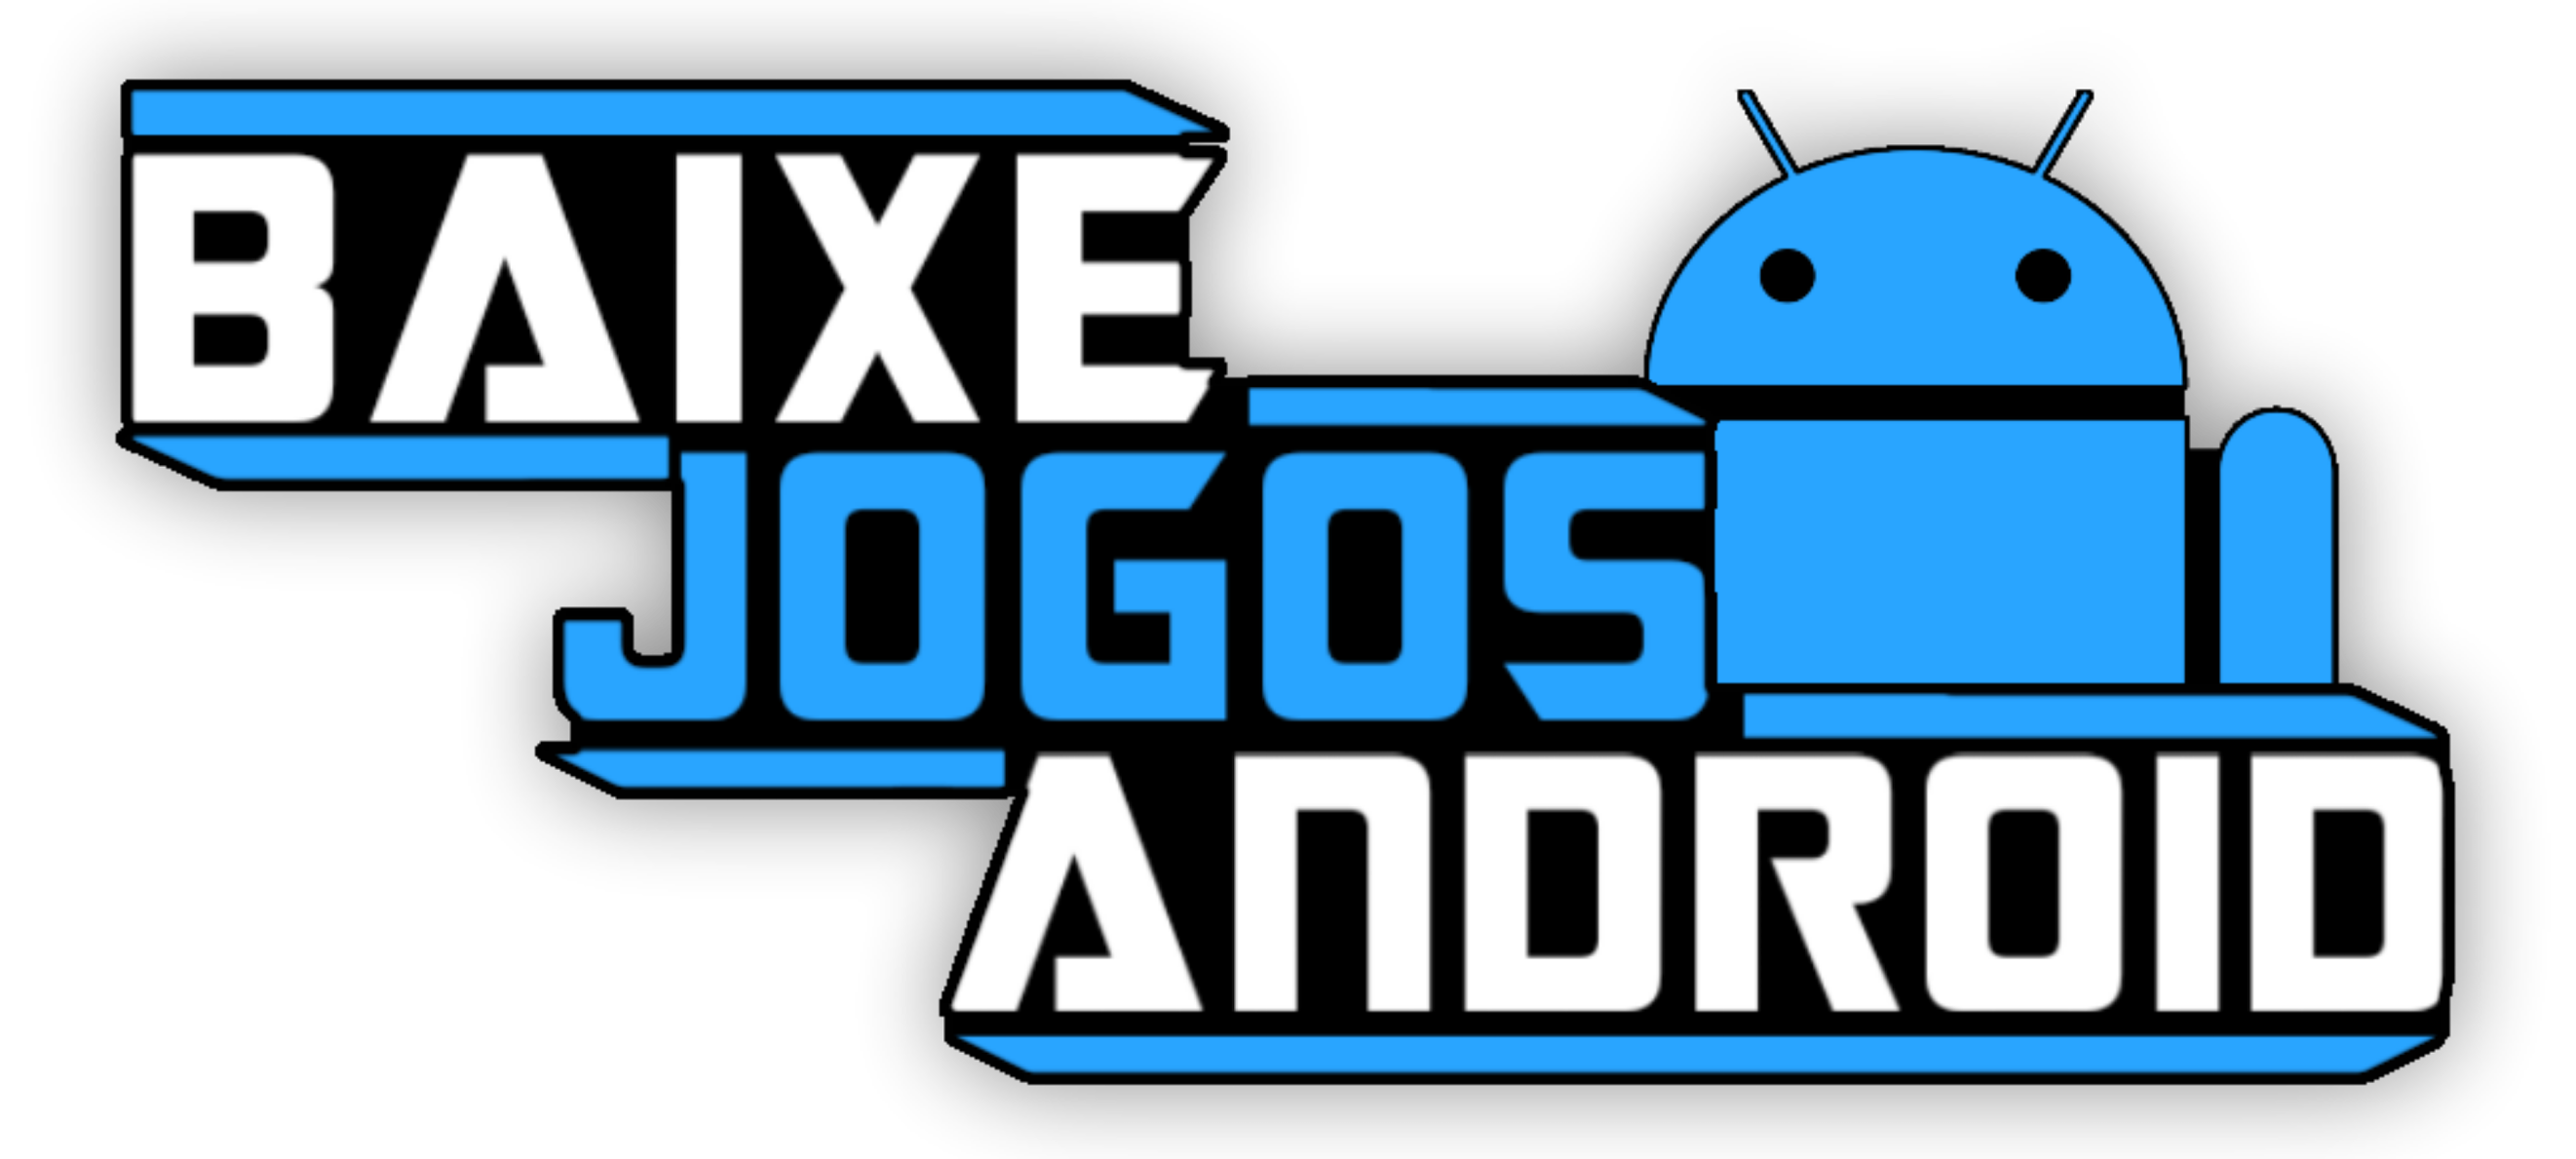 7games aplicativo android download